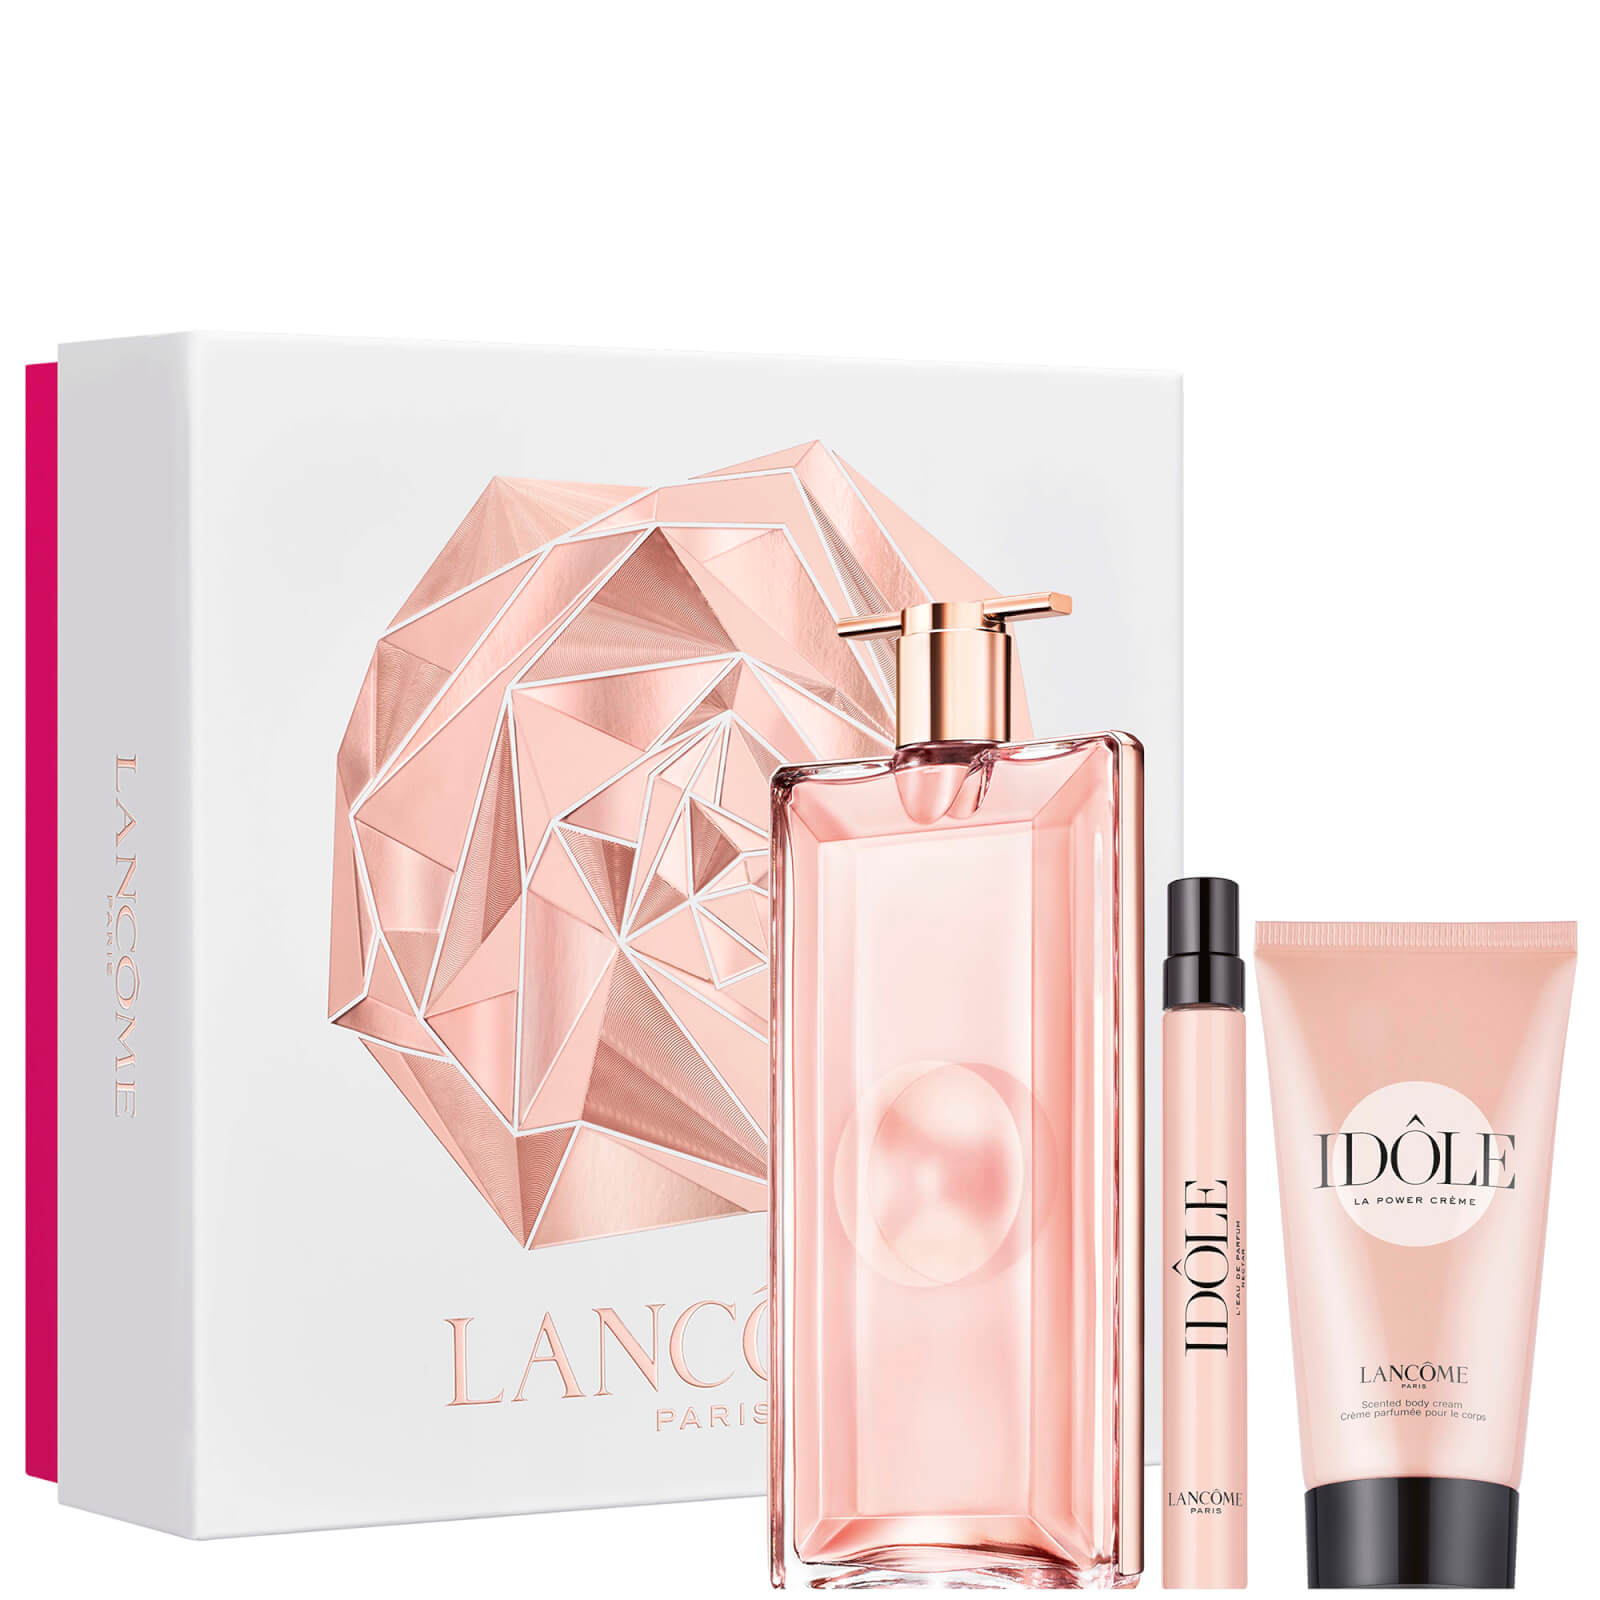 Lancôme Idôle Eau De Parfum 50ml Holiday Gift Set For Her (Worth £106.00)